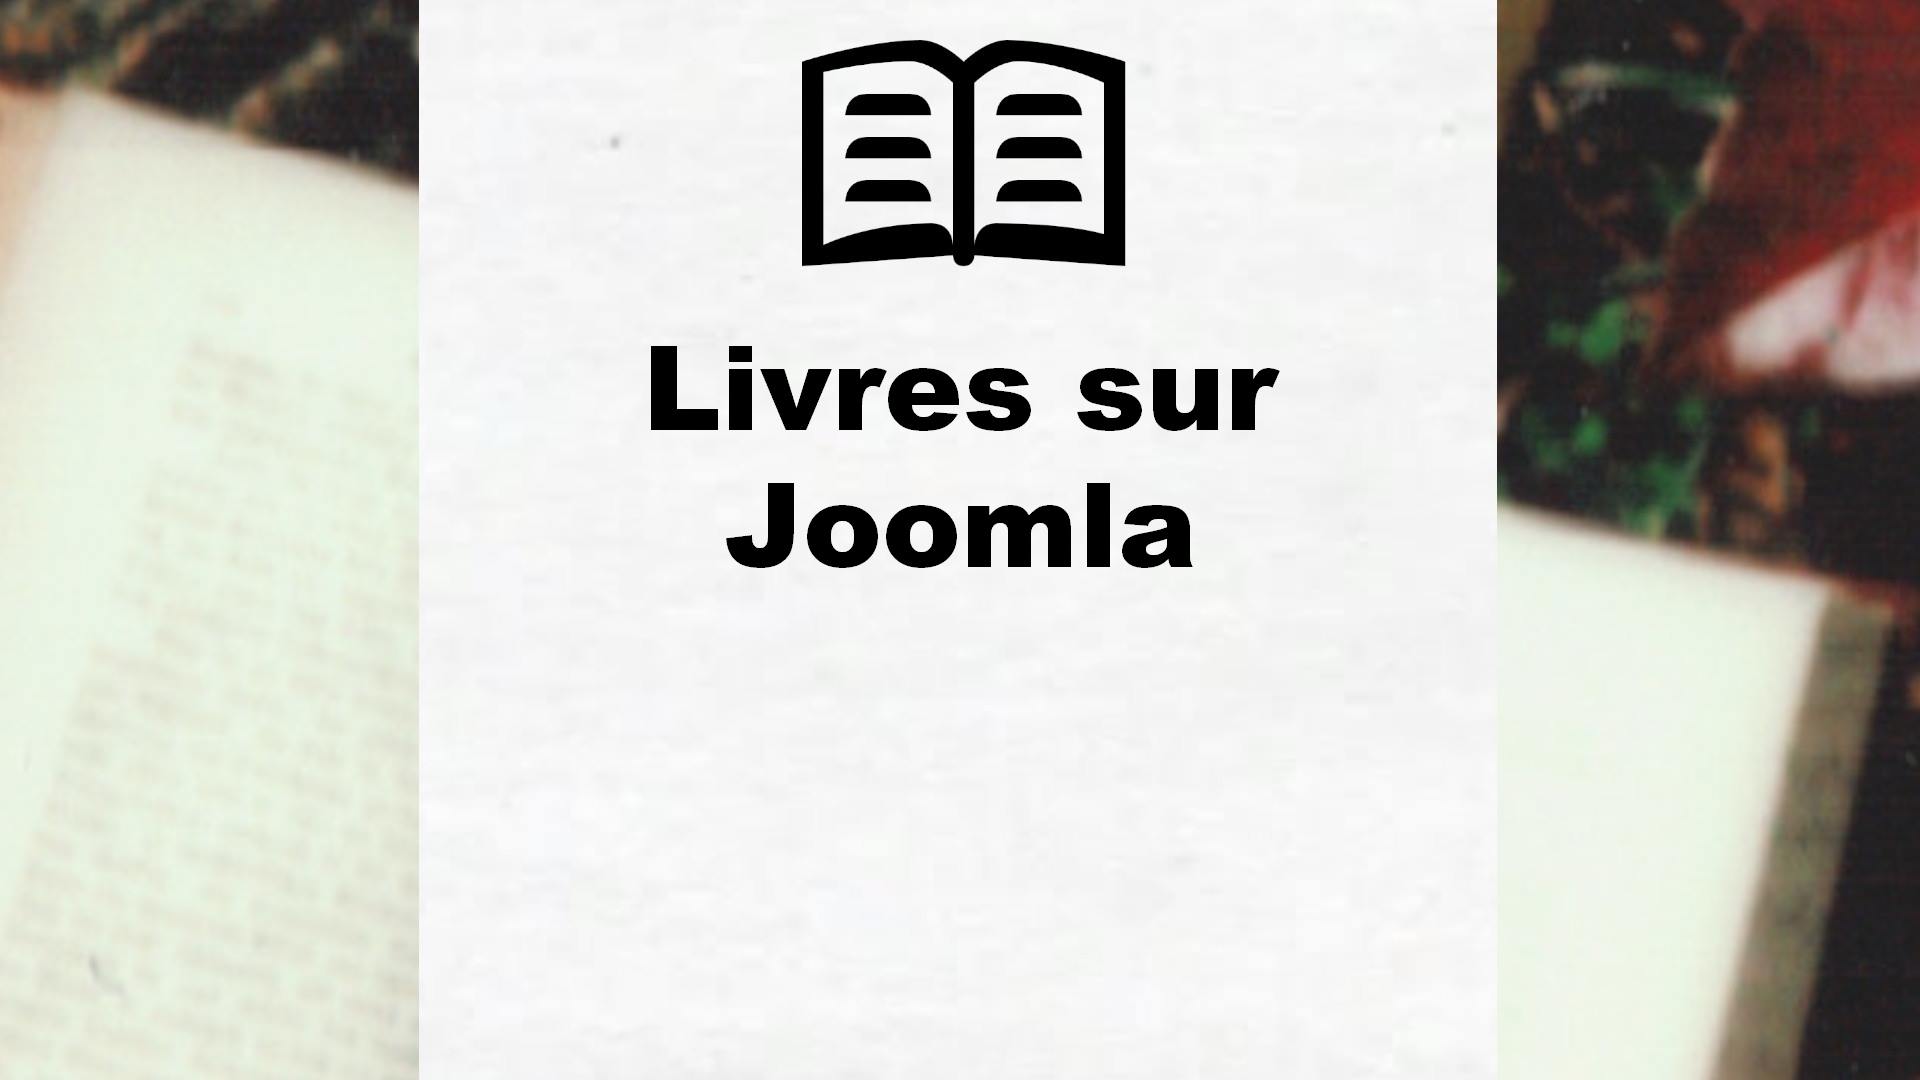 Livres sur Joomla